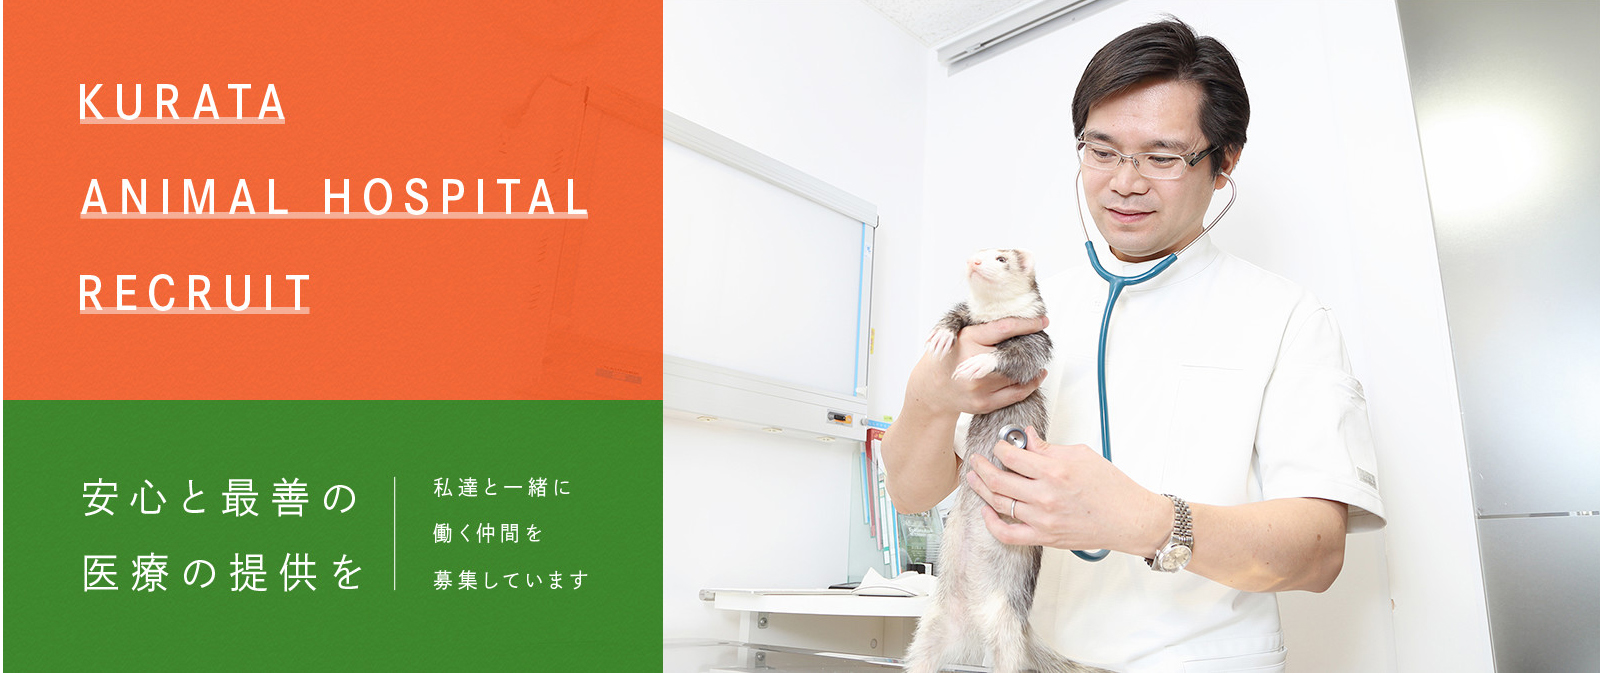 KURATA Animal Hospital RECRUIT 